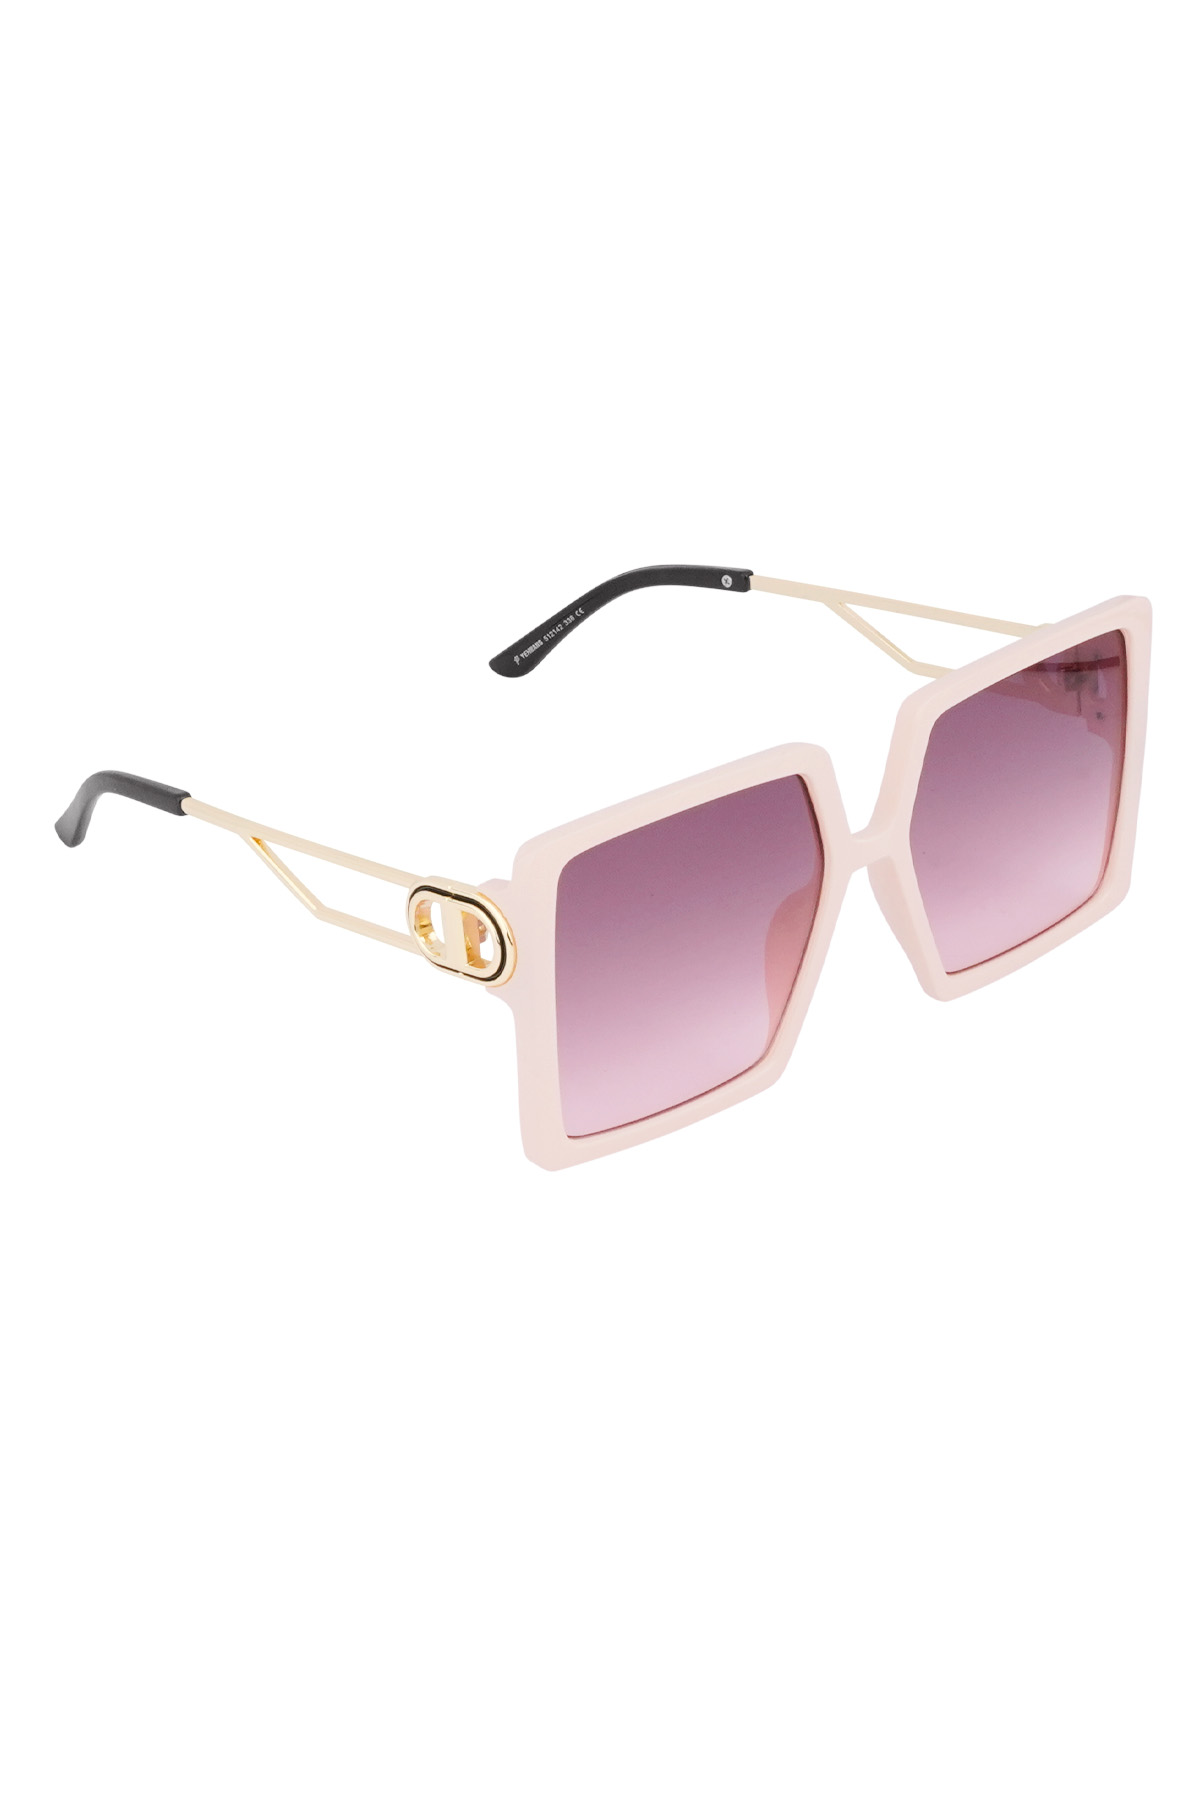 Summer statement sunglasses - pink 